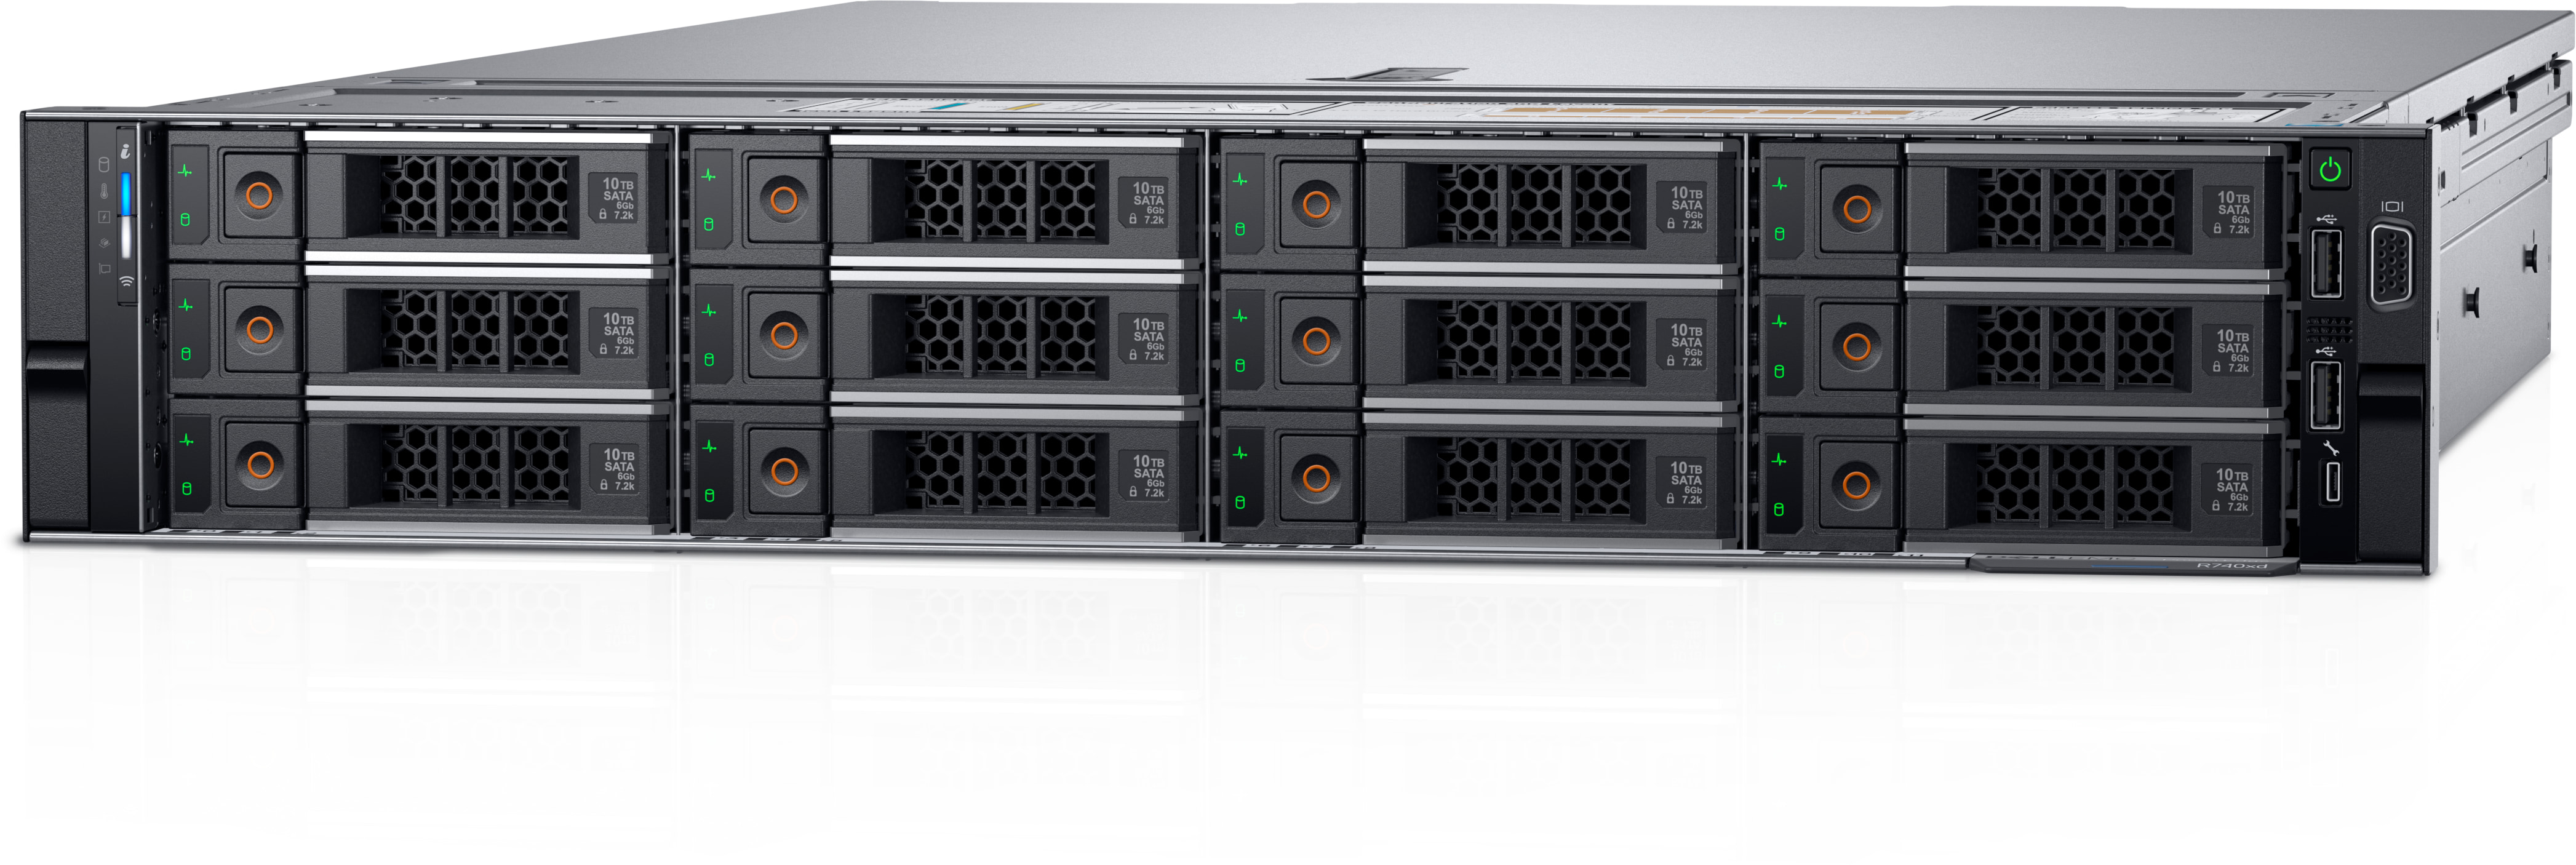 koloni tag på sightseeing præambel PowerEdge R740 Rack Server | Dell USA